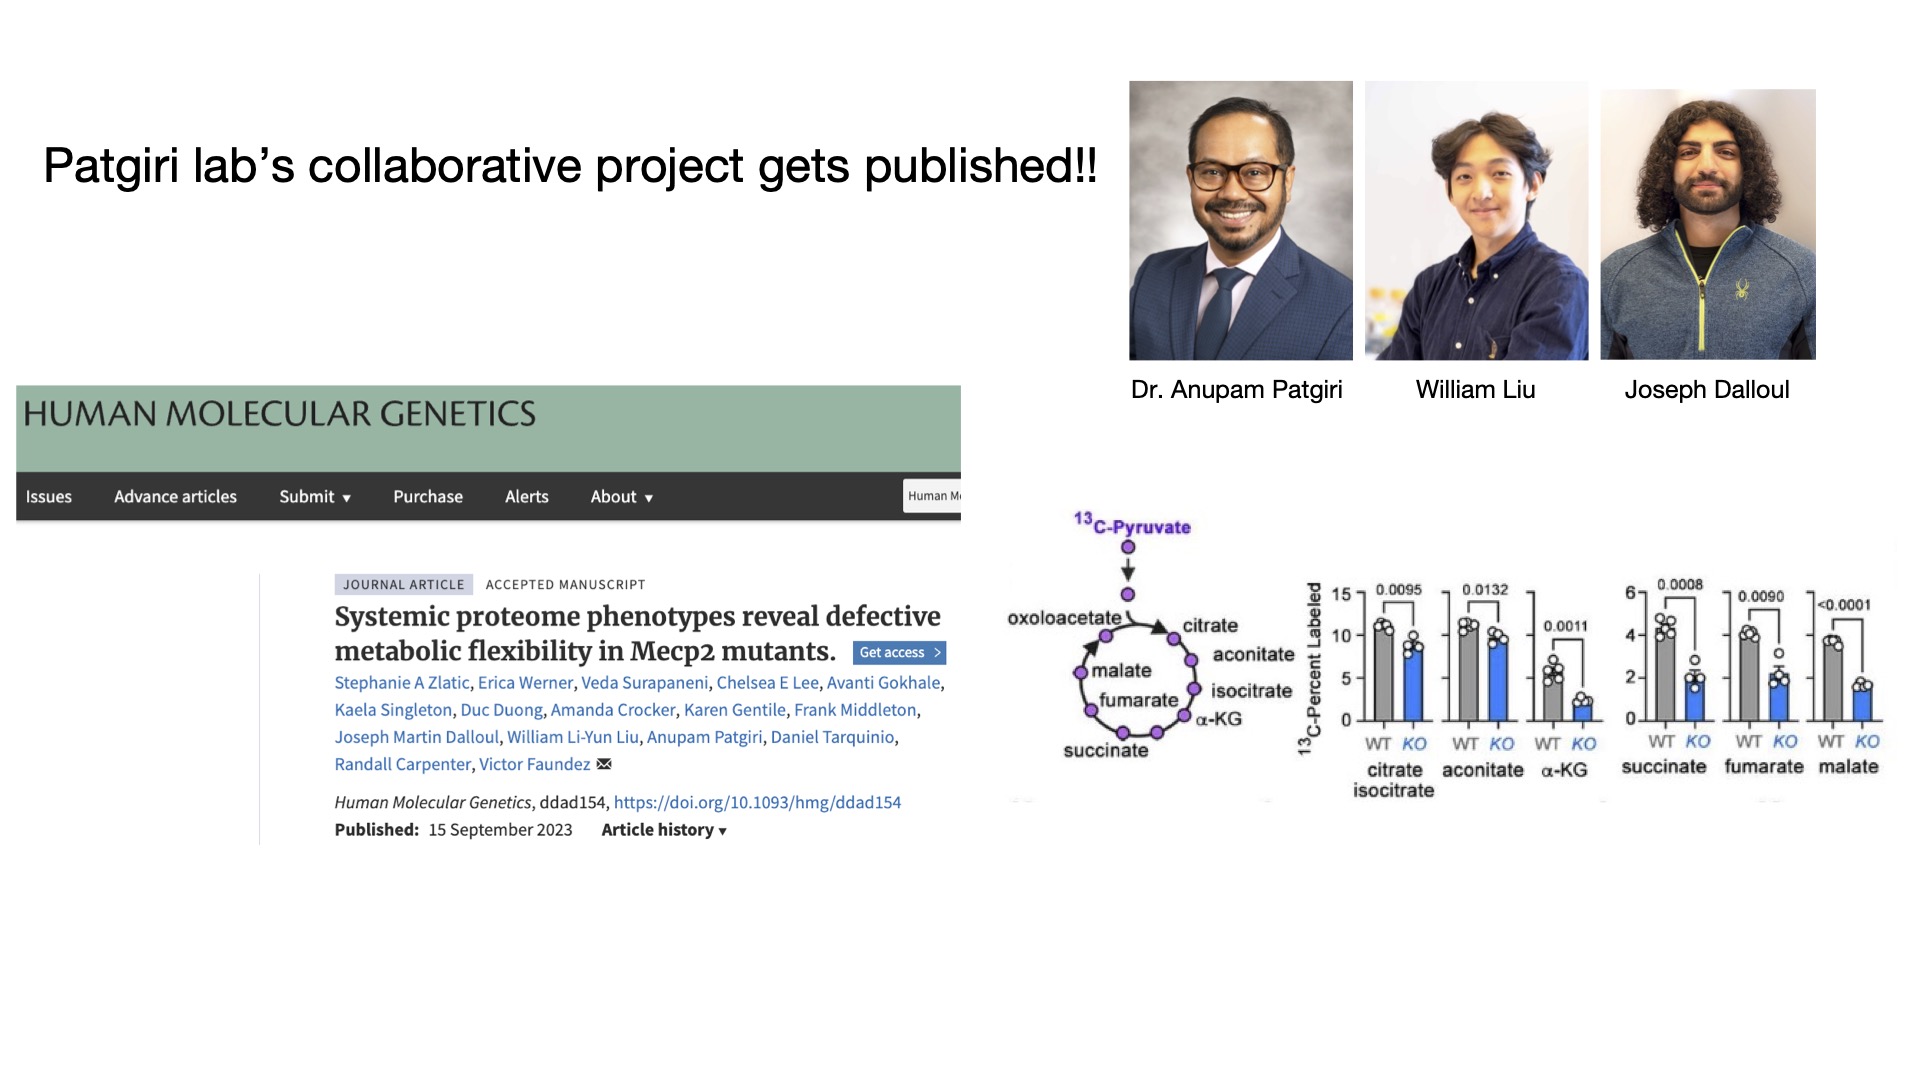 Patgiri publication announcement in Human Molecular Genetics